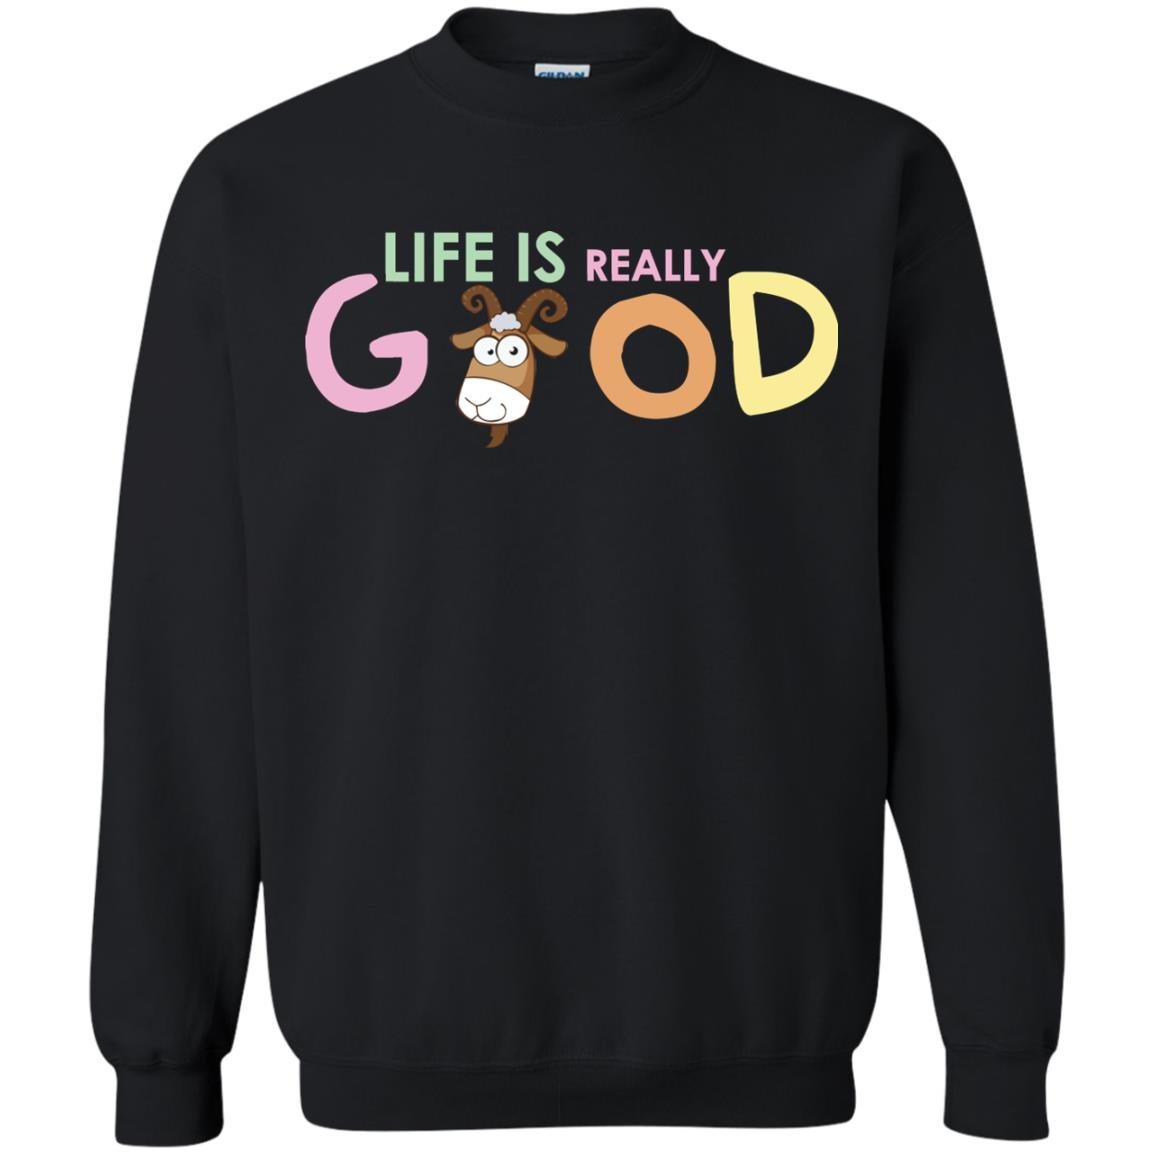 Life Is Really Good With My Cute Goat T-shirtG180 Gildan Crewneck Pullover Sweatshirt 8 oz.